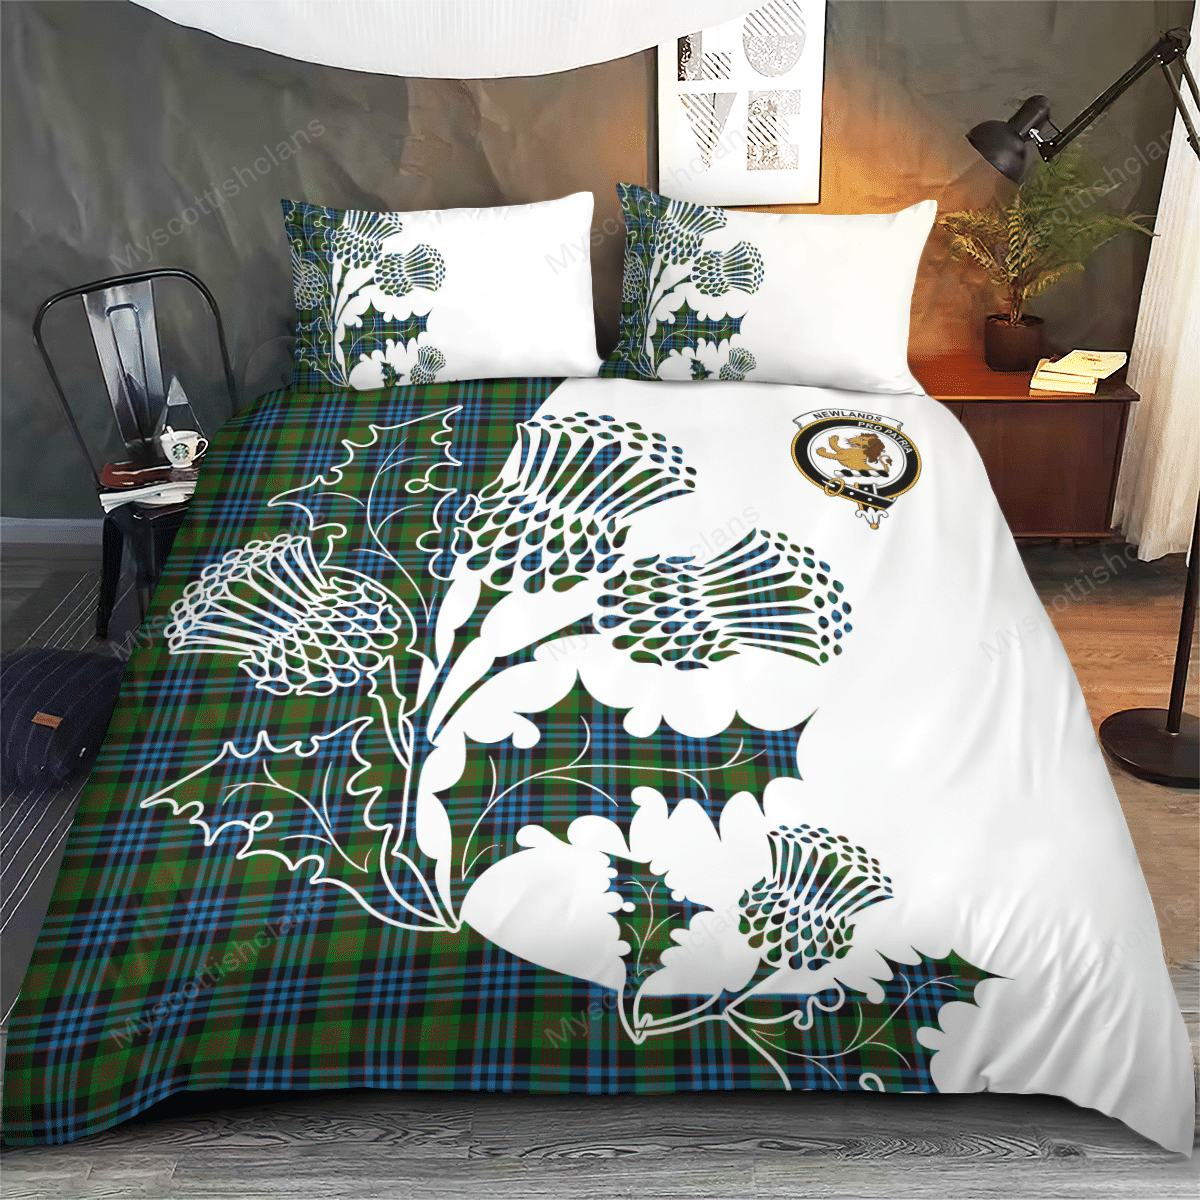 Newlands Tartan Crest Bedding Set - Thistle Style